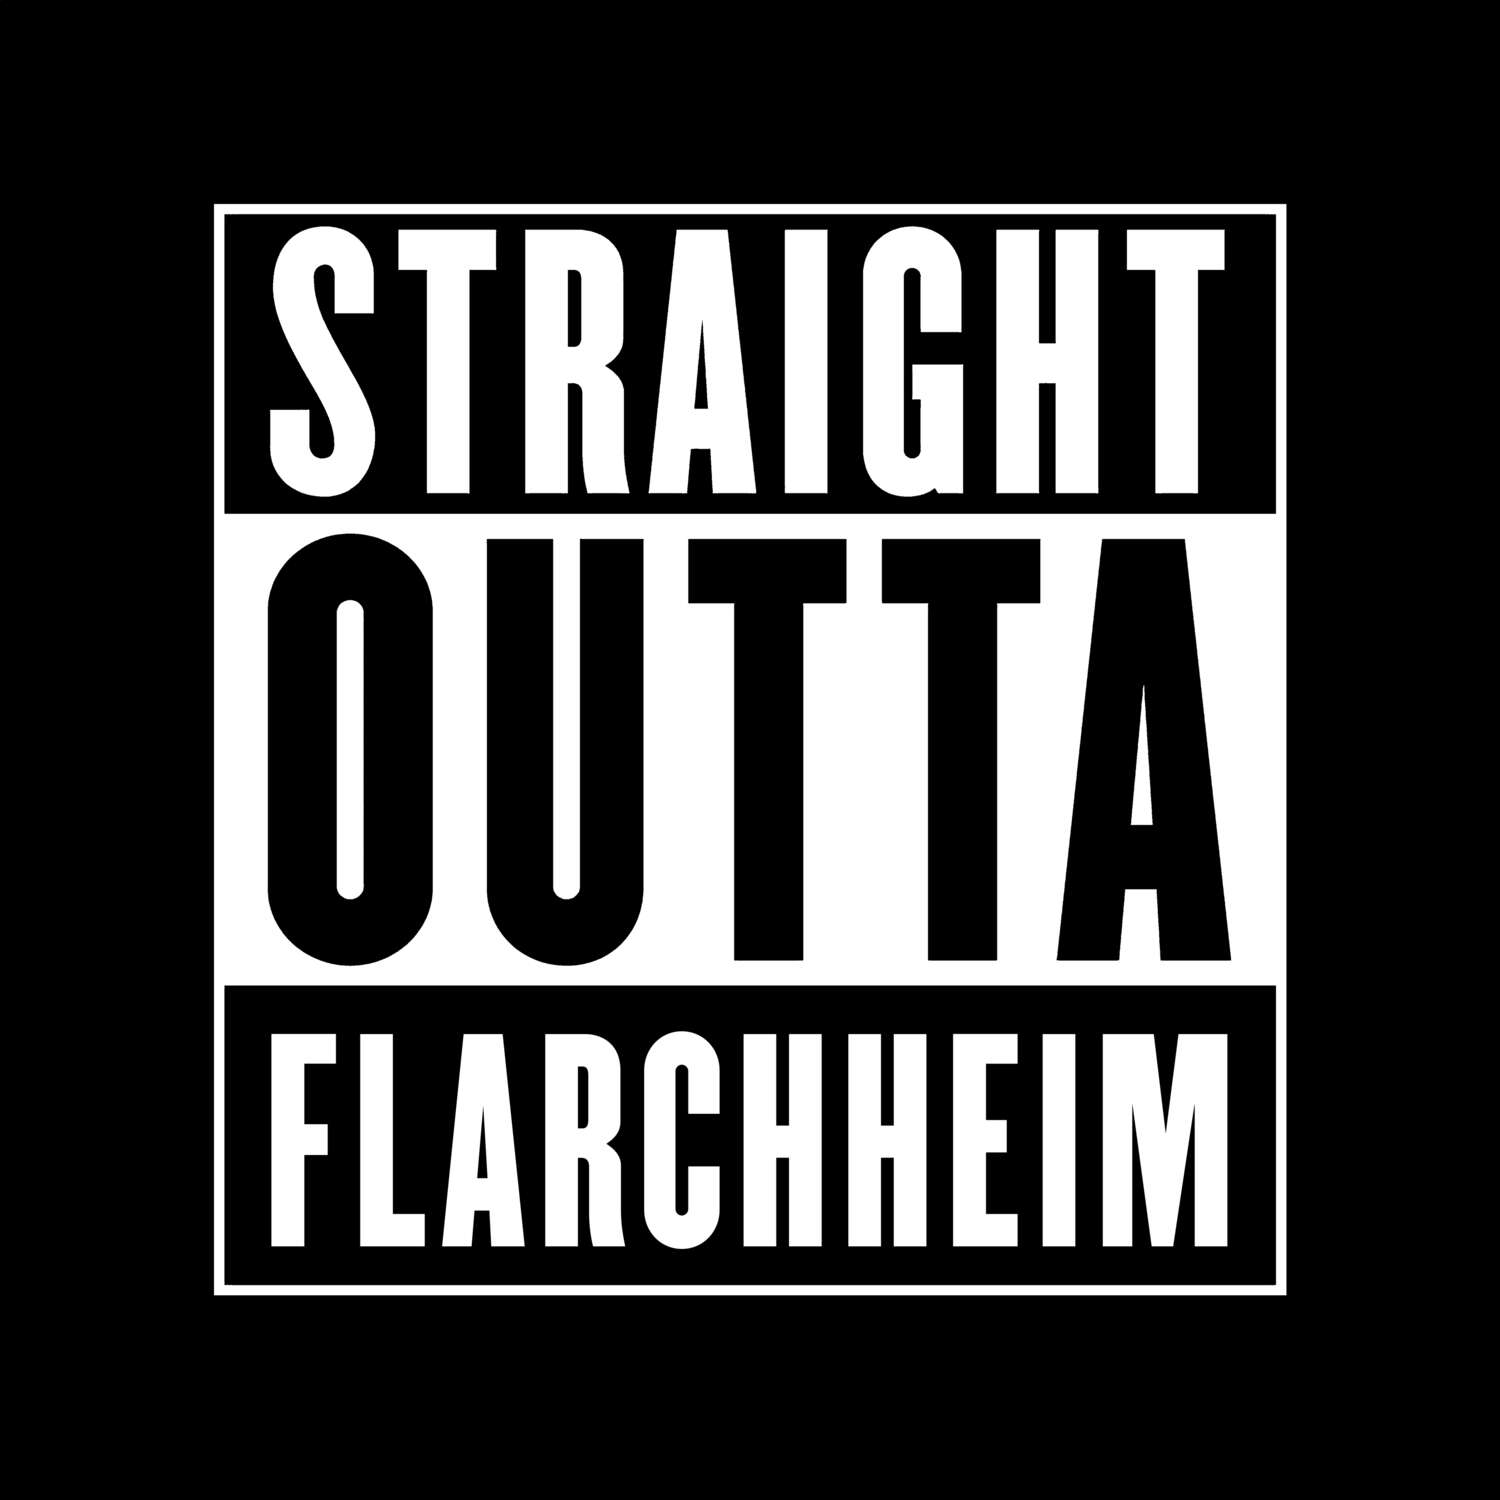 Flarchheim T-Shirt »Straight Outta«